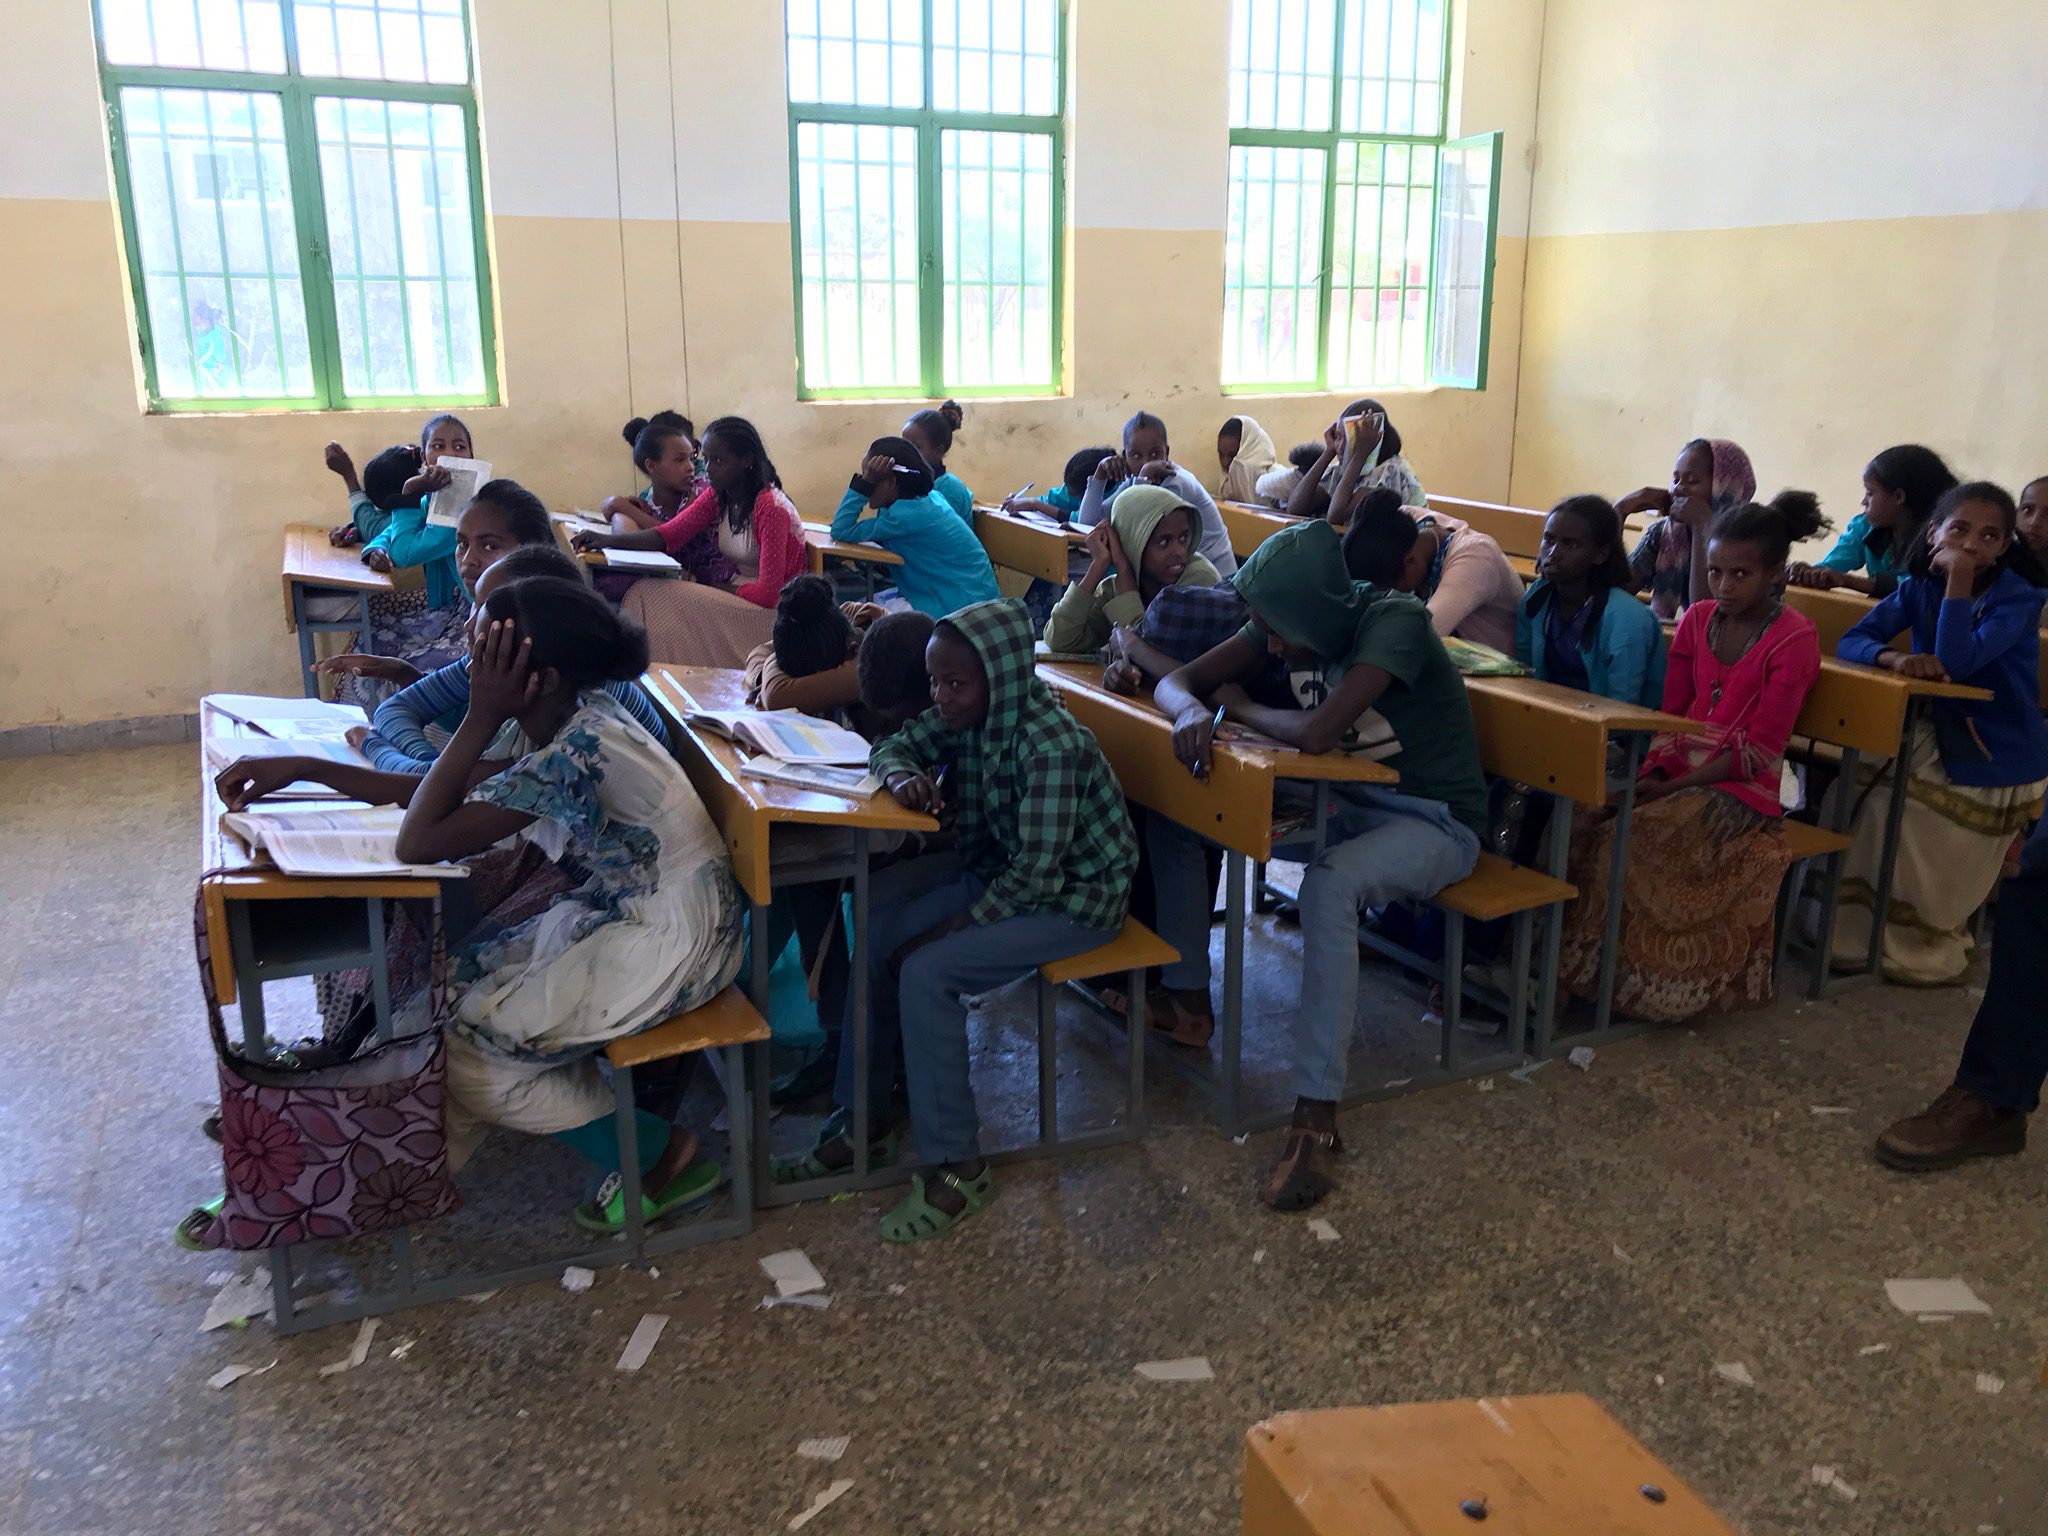 Relief Society of Tigray-sponsored school in Ethiopia. Photo courtesy of David Beckmann.